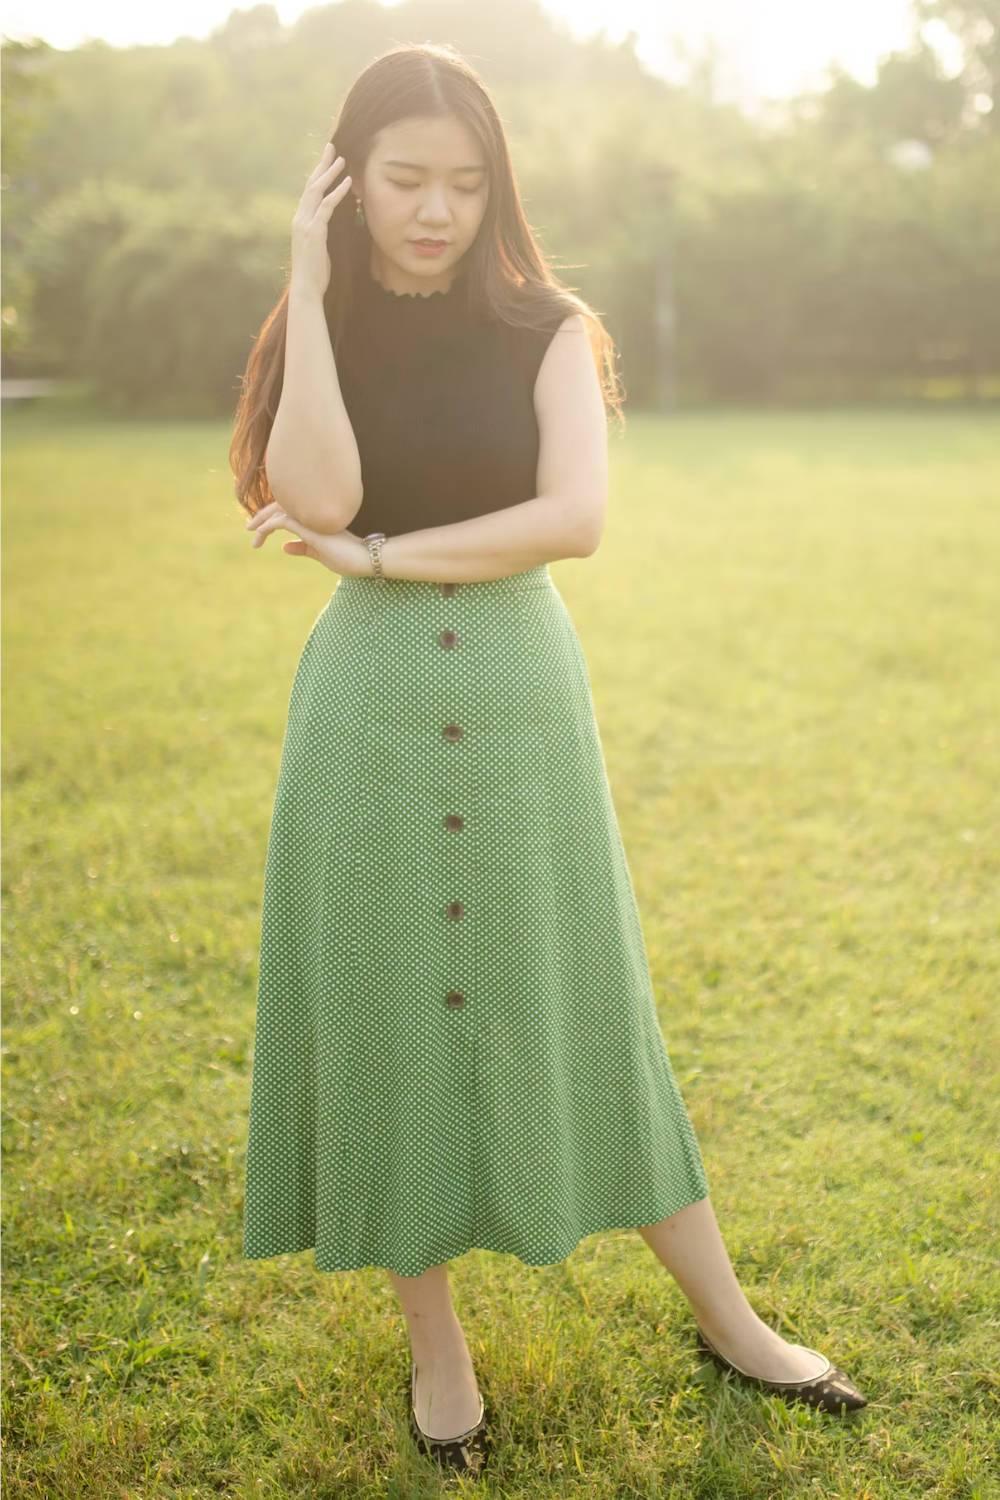 sleeveless top green skirt outfit